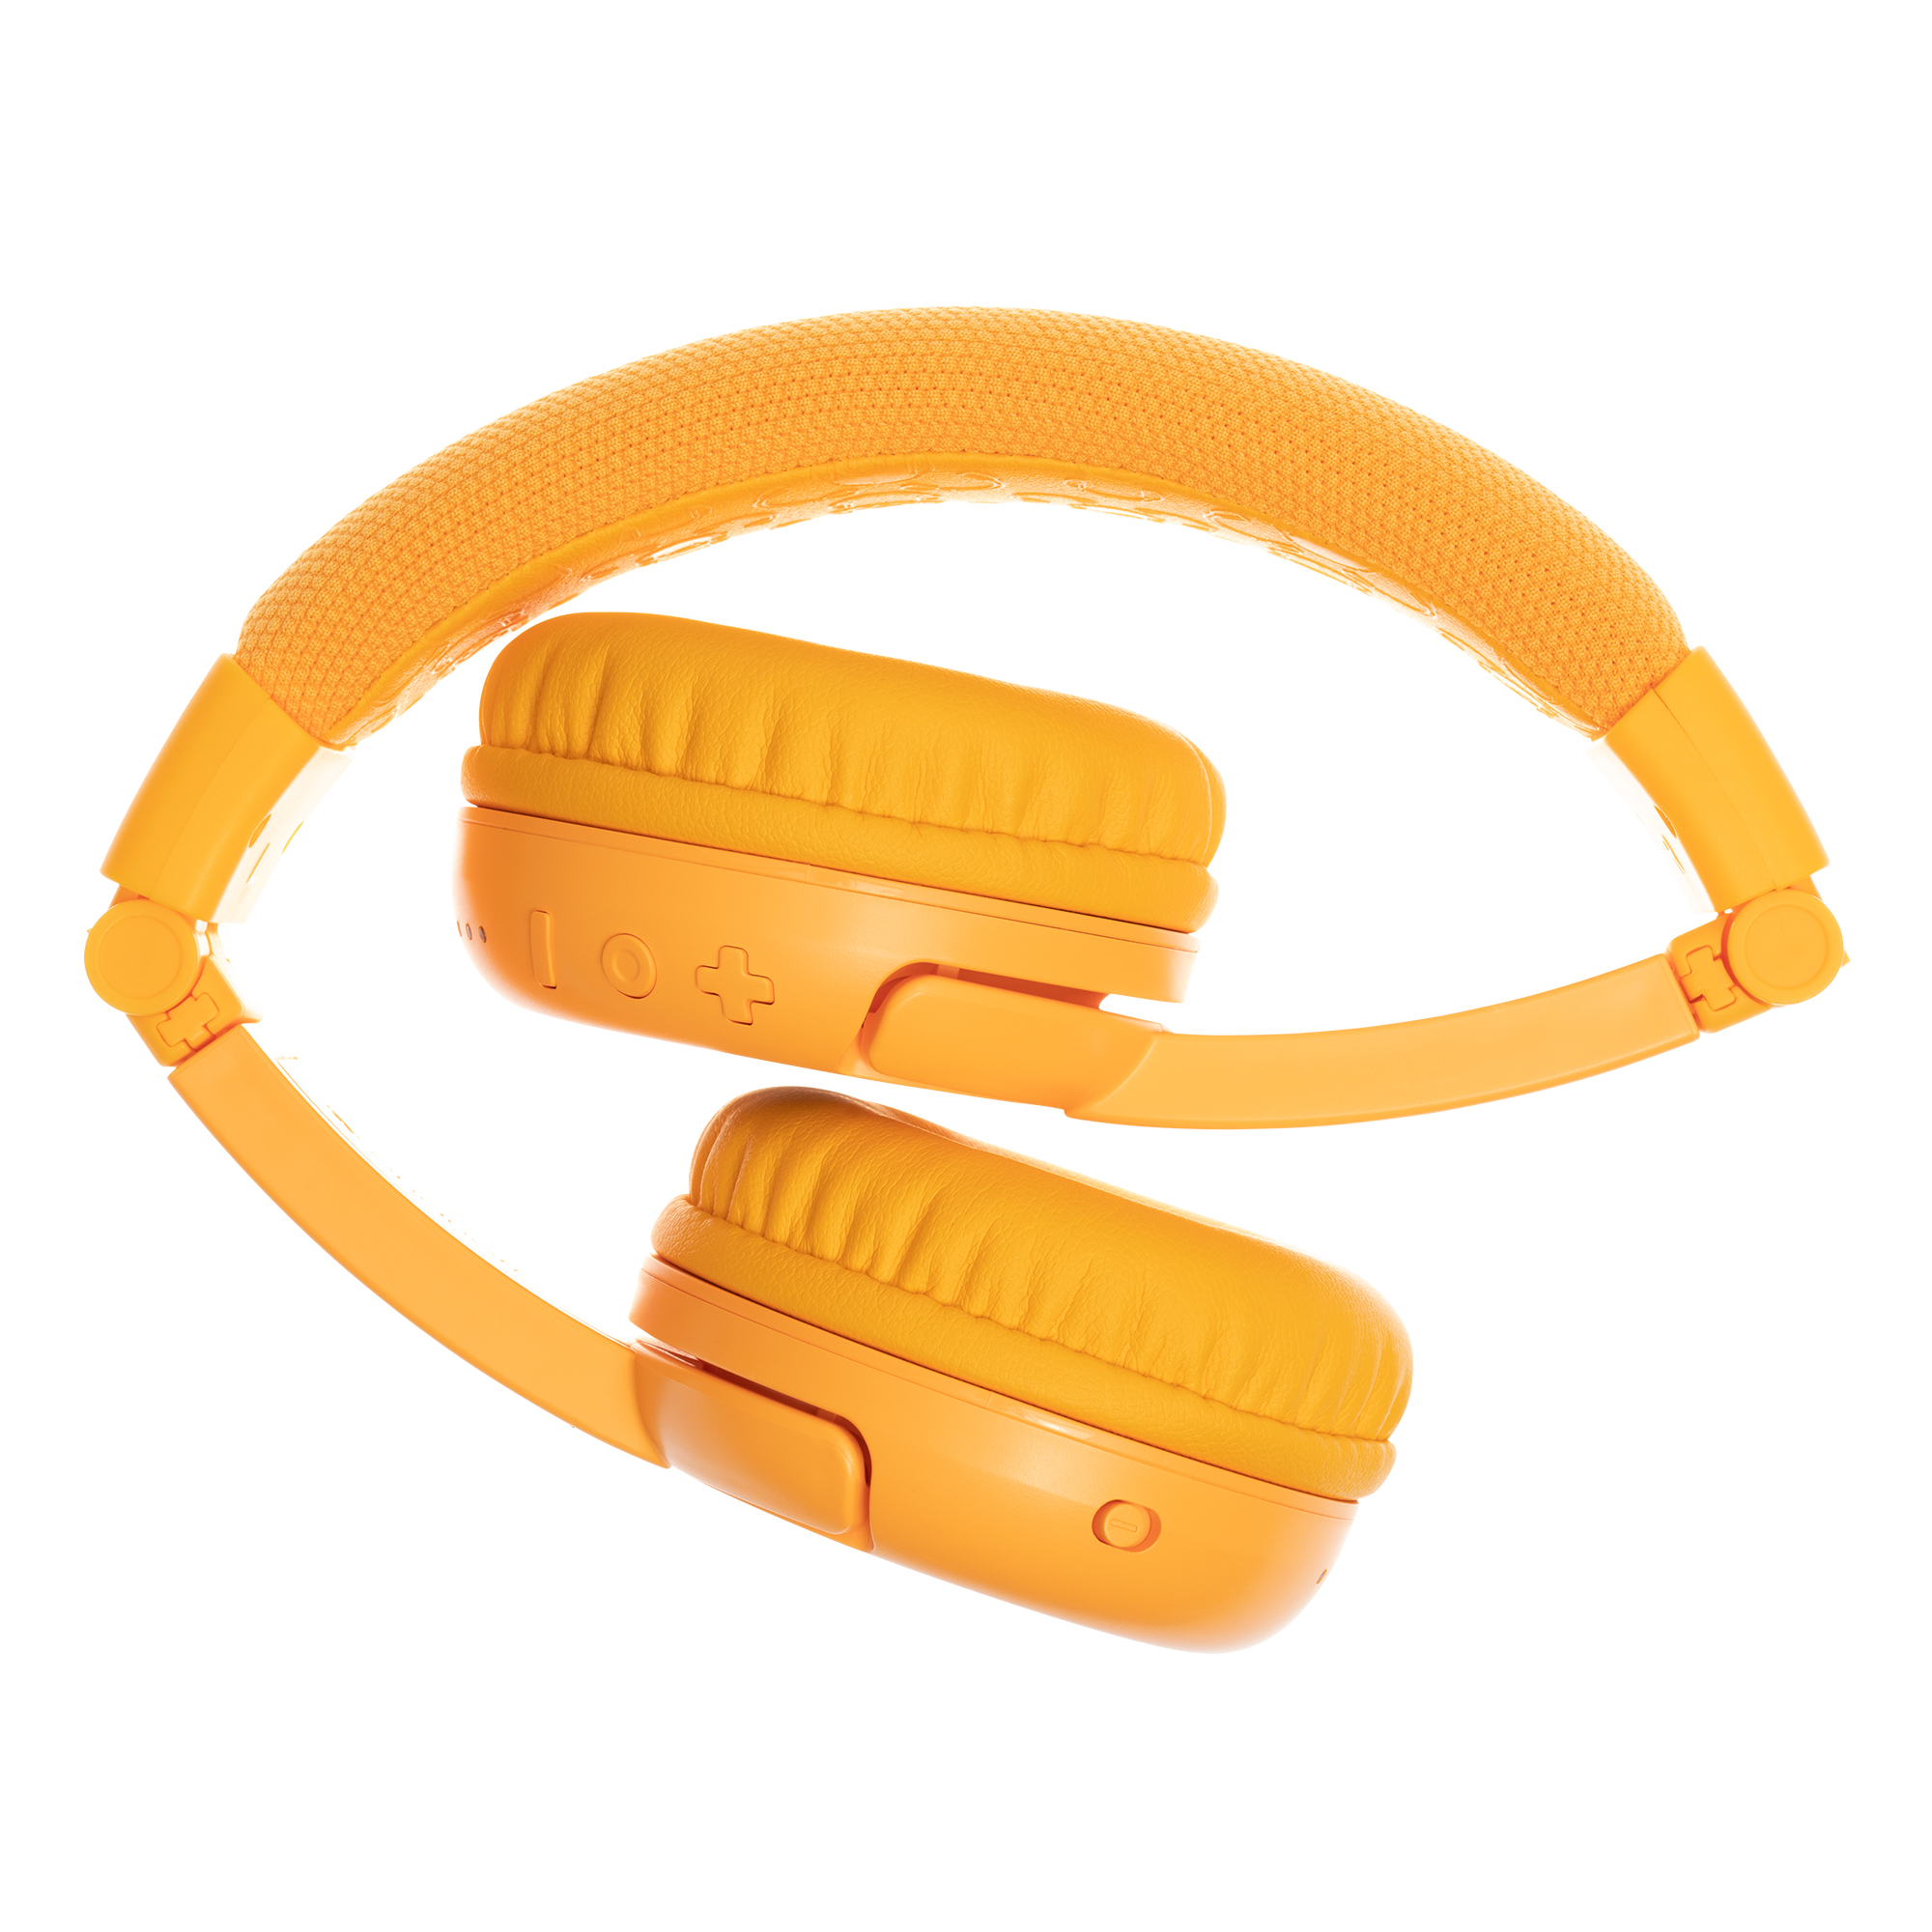 Gelb Kinder Bluetooth On-ear Kopfhörer Play+, BUDDYPHONES